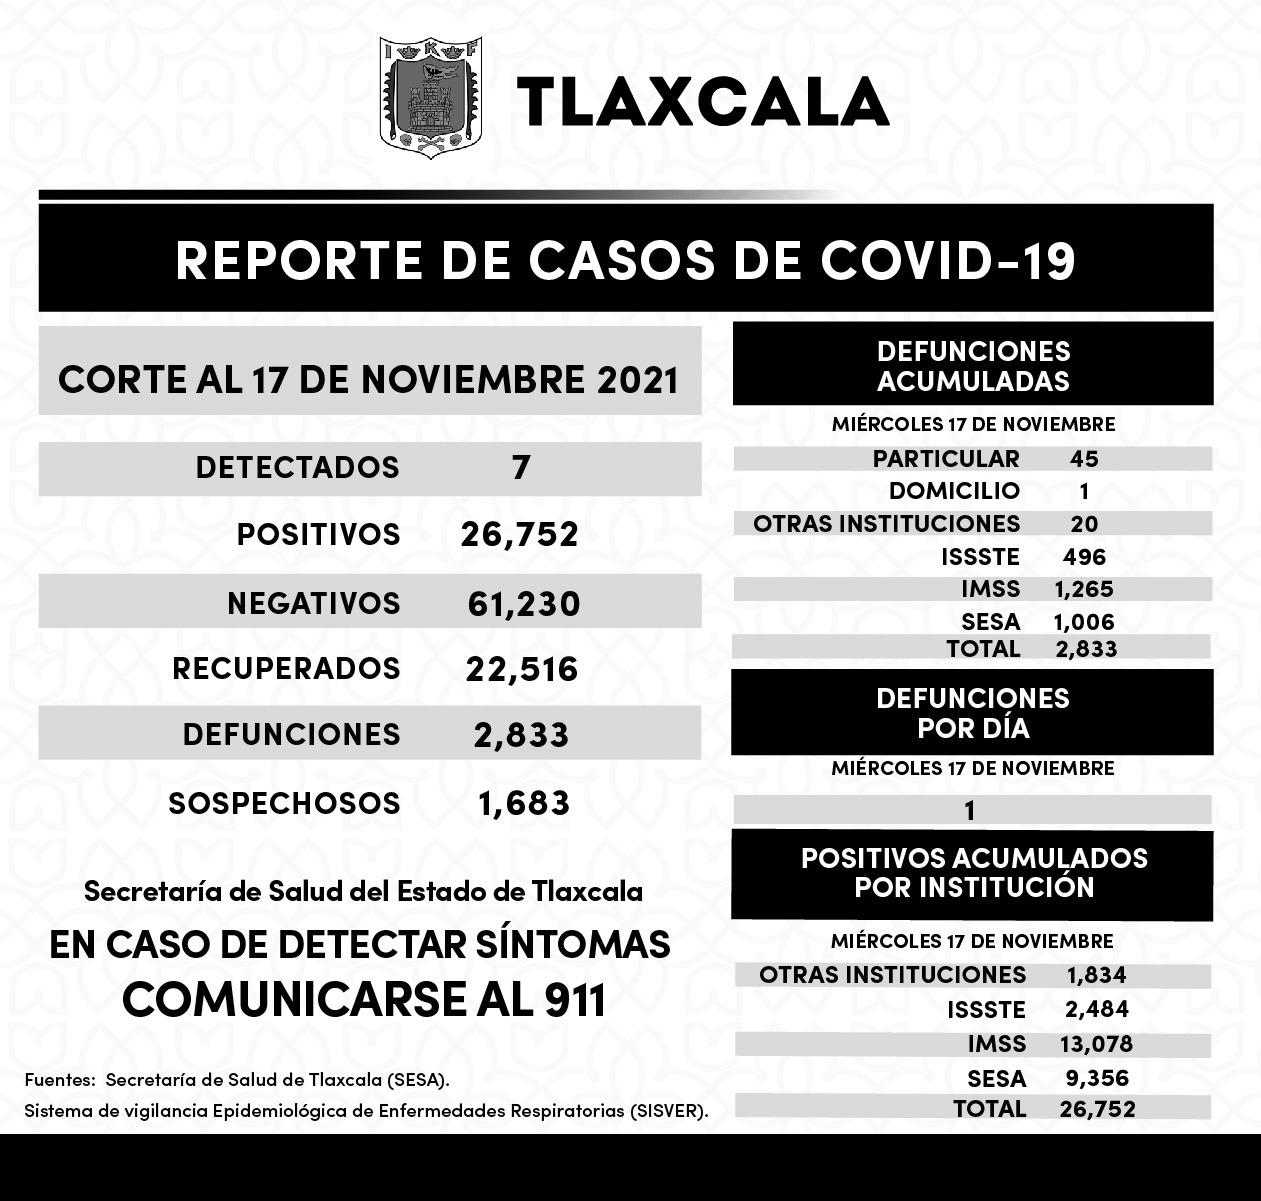 REGISTRA SESA 7 CASOS POSITIVOS DE COVID-19 EN TLAXCALA